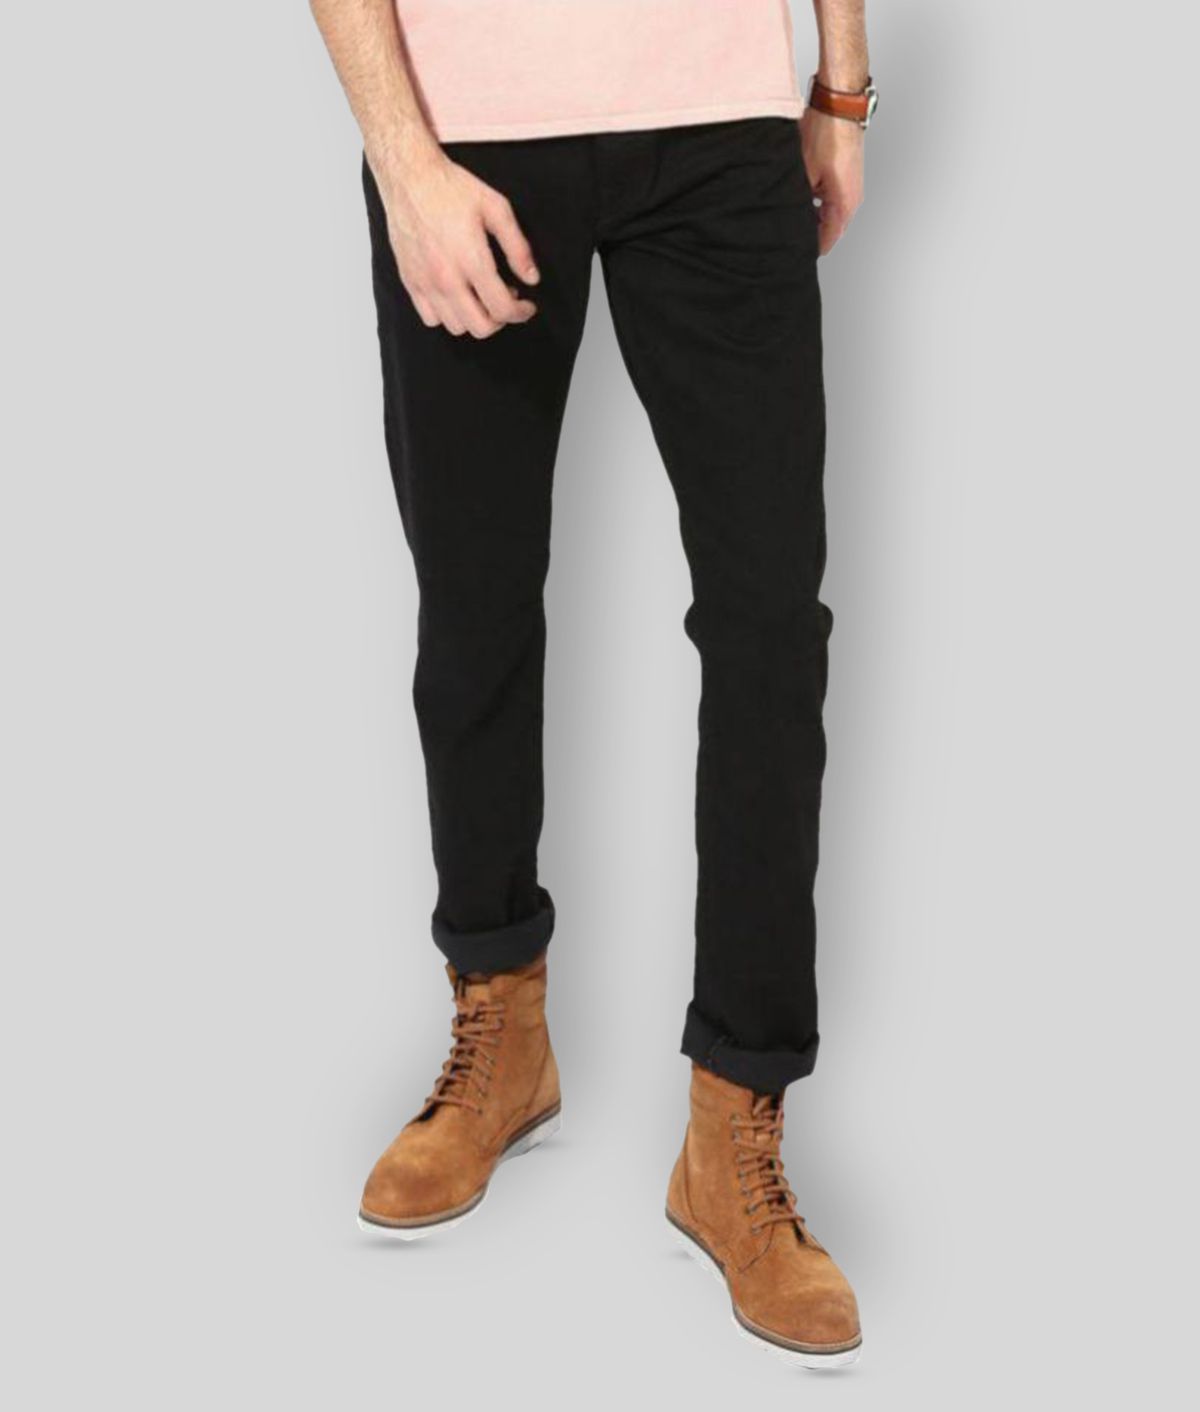     			Lawson - Black Cotton Blend Slim Fit Men's Jeans ( Pack of 1 )